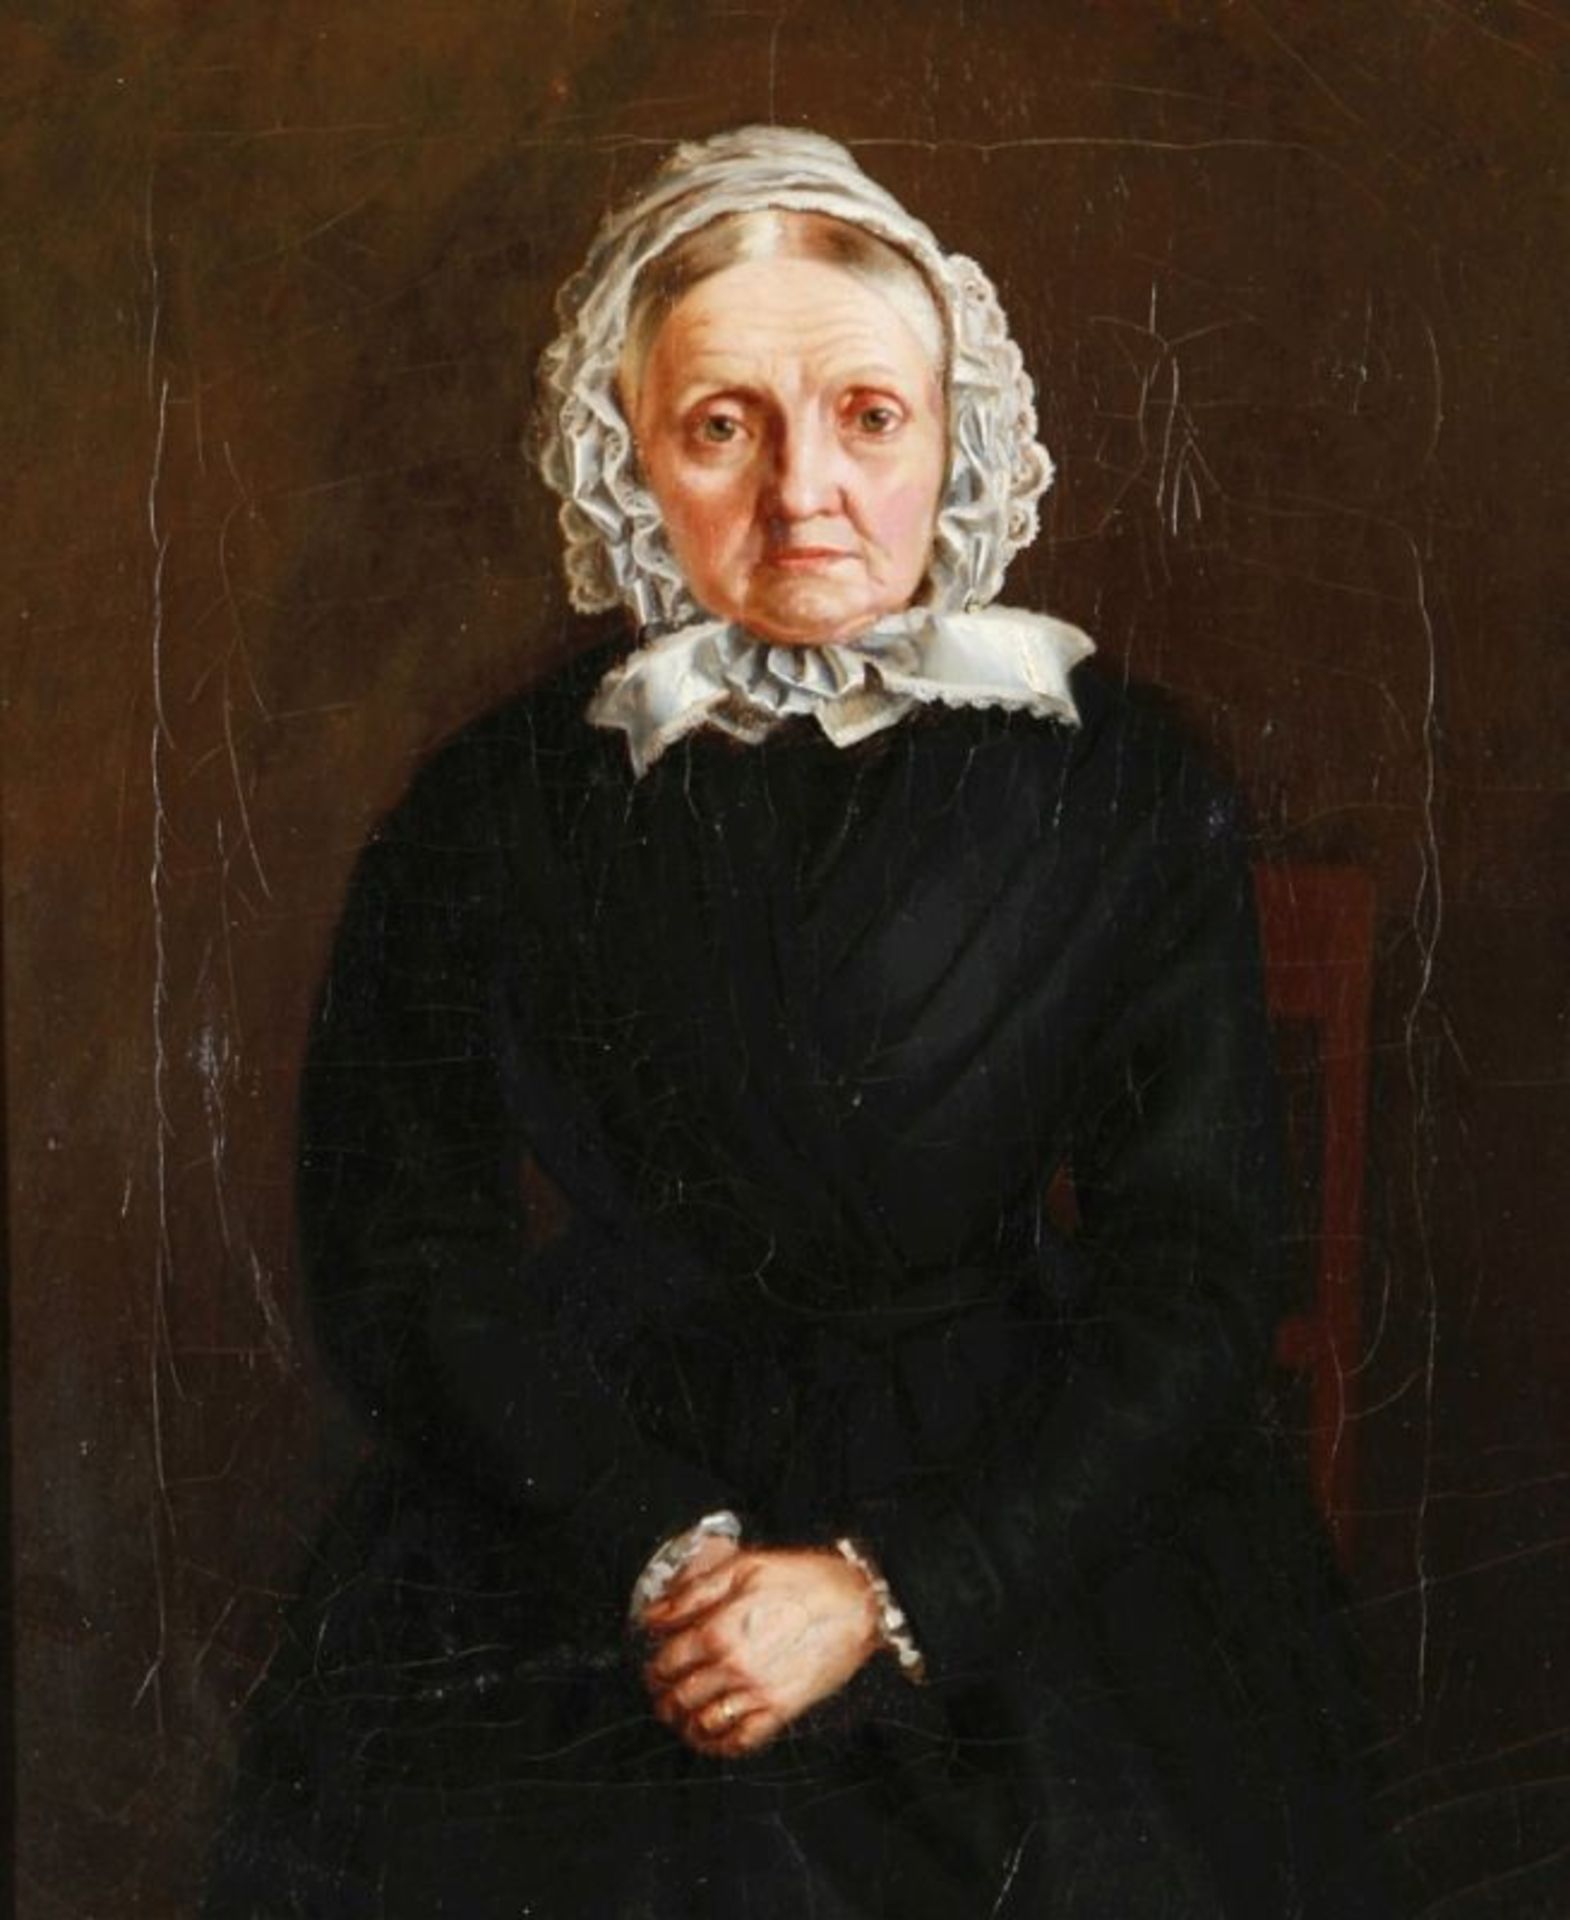 Anonymer Maler, Mitte 19. Jh. "Frauenportrait", Öl/Lw., 45 x 37 cm, starkes Craquele- - -20.00 %